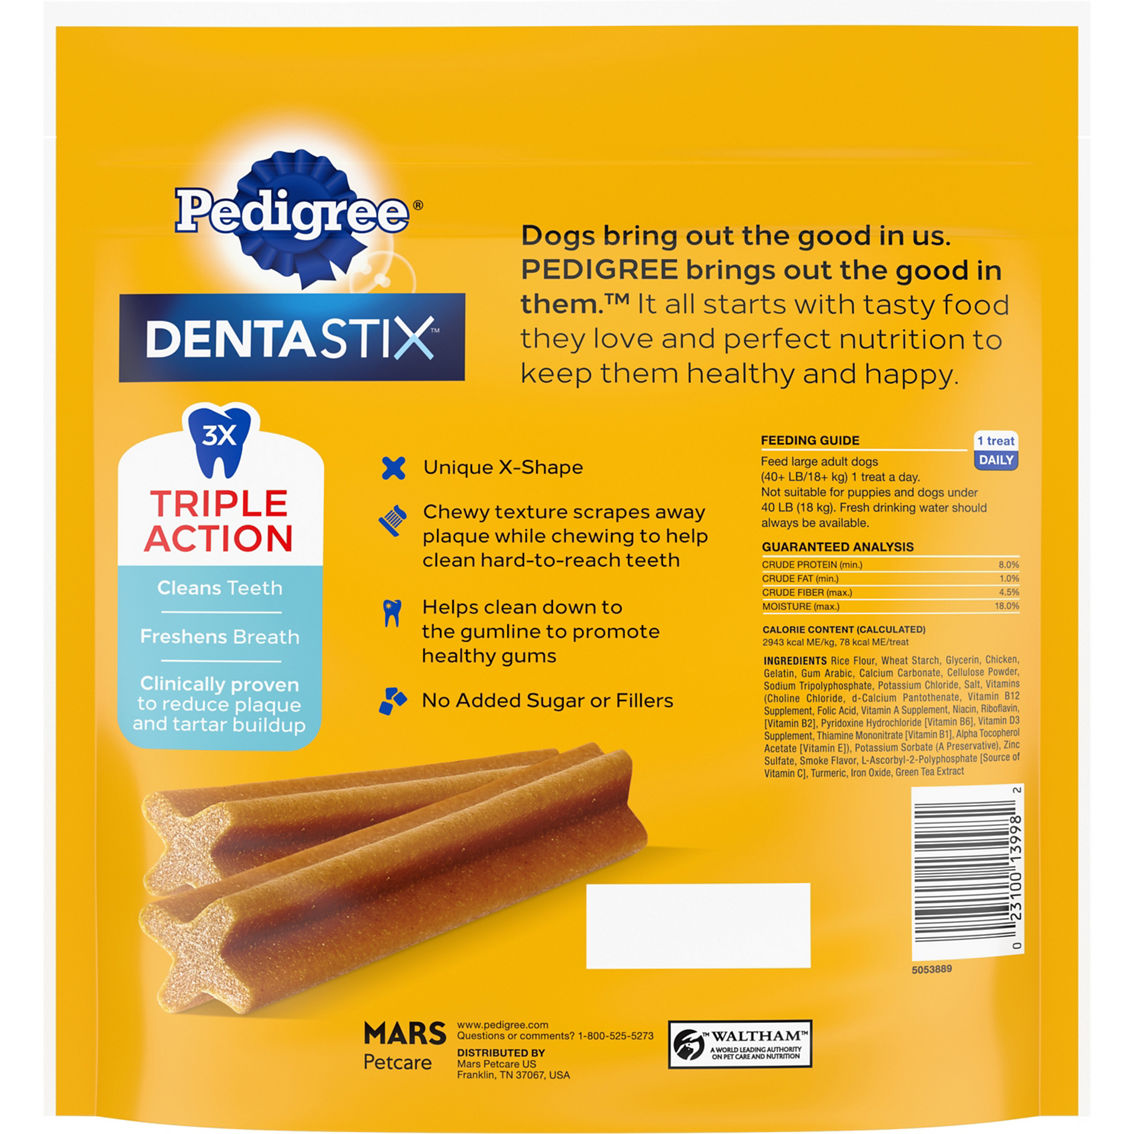 Pedigree Dentastix Originall Large Dog Dental Treats 40 ct. - Image 2 of 2